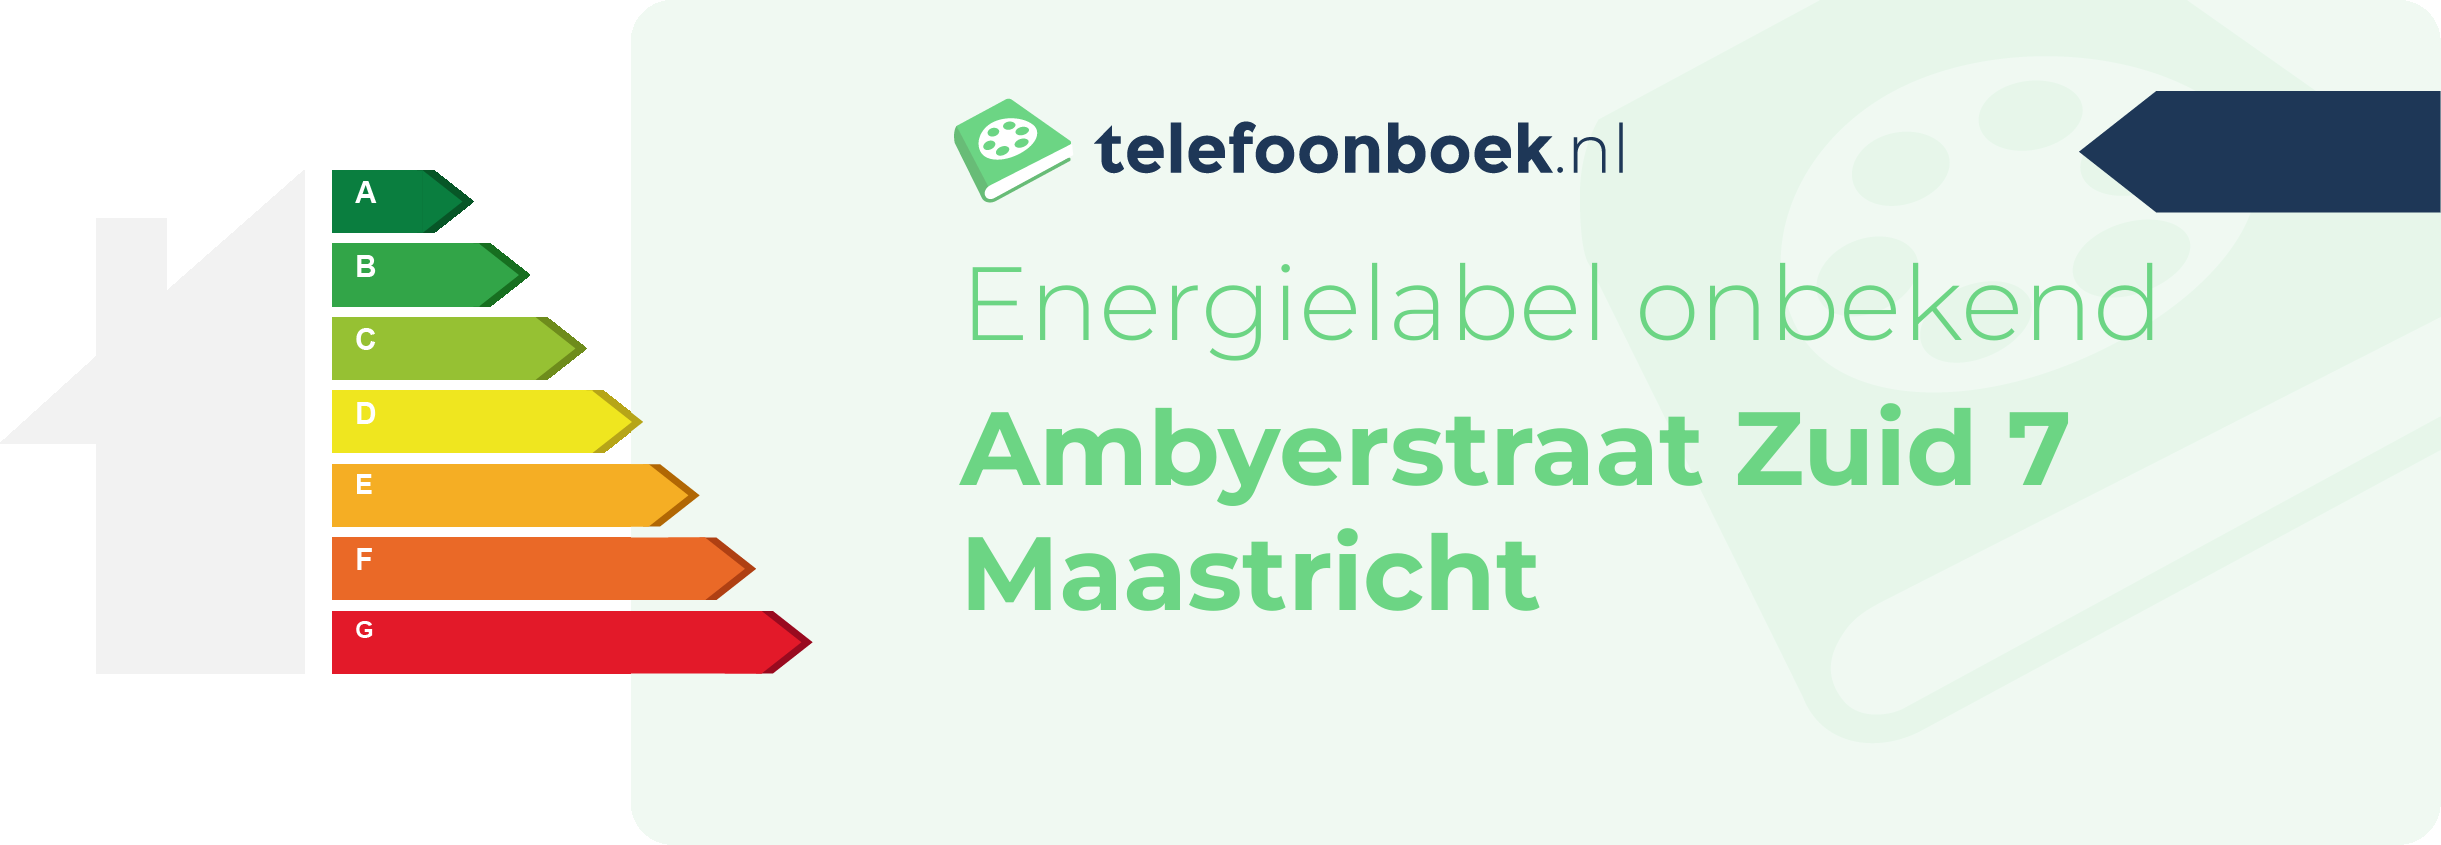 Energielabel Ambyerstraat Zuid 7 Maastricht